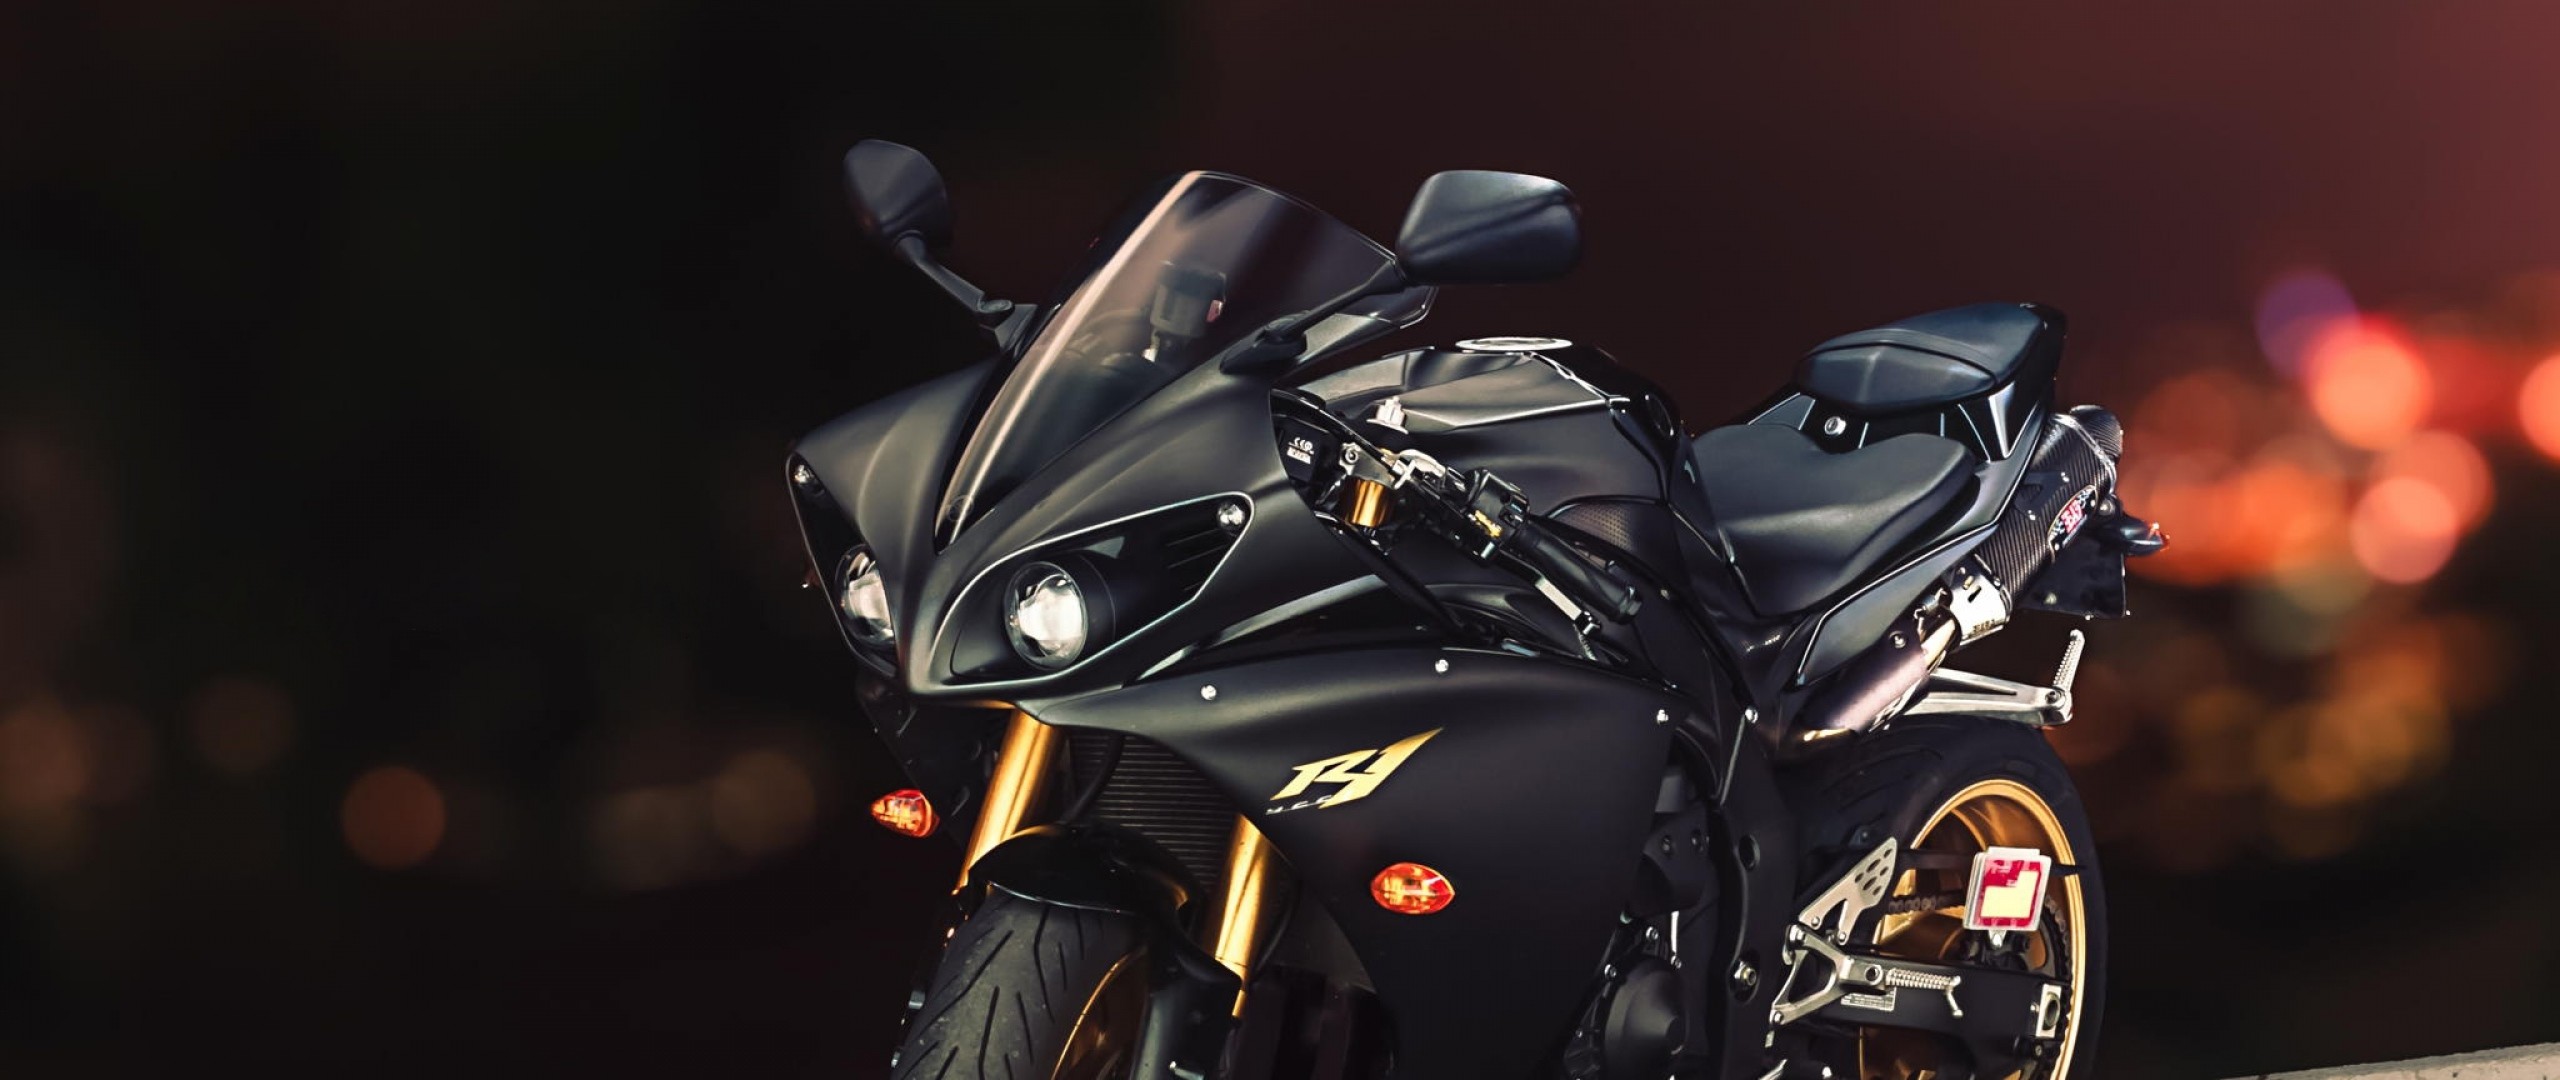 2560x1080 HD Background Yamaha YZF R1 Sport Bike Black And Gold Wallpaper .